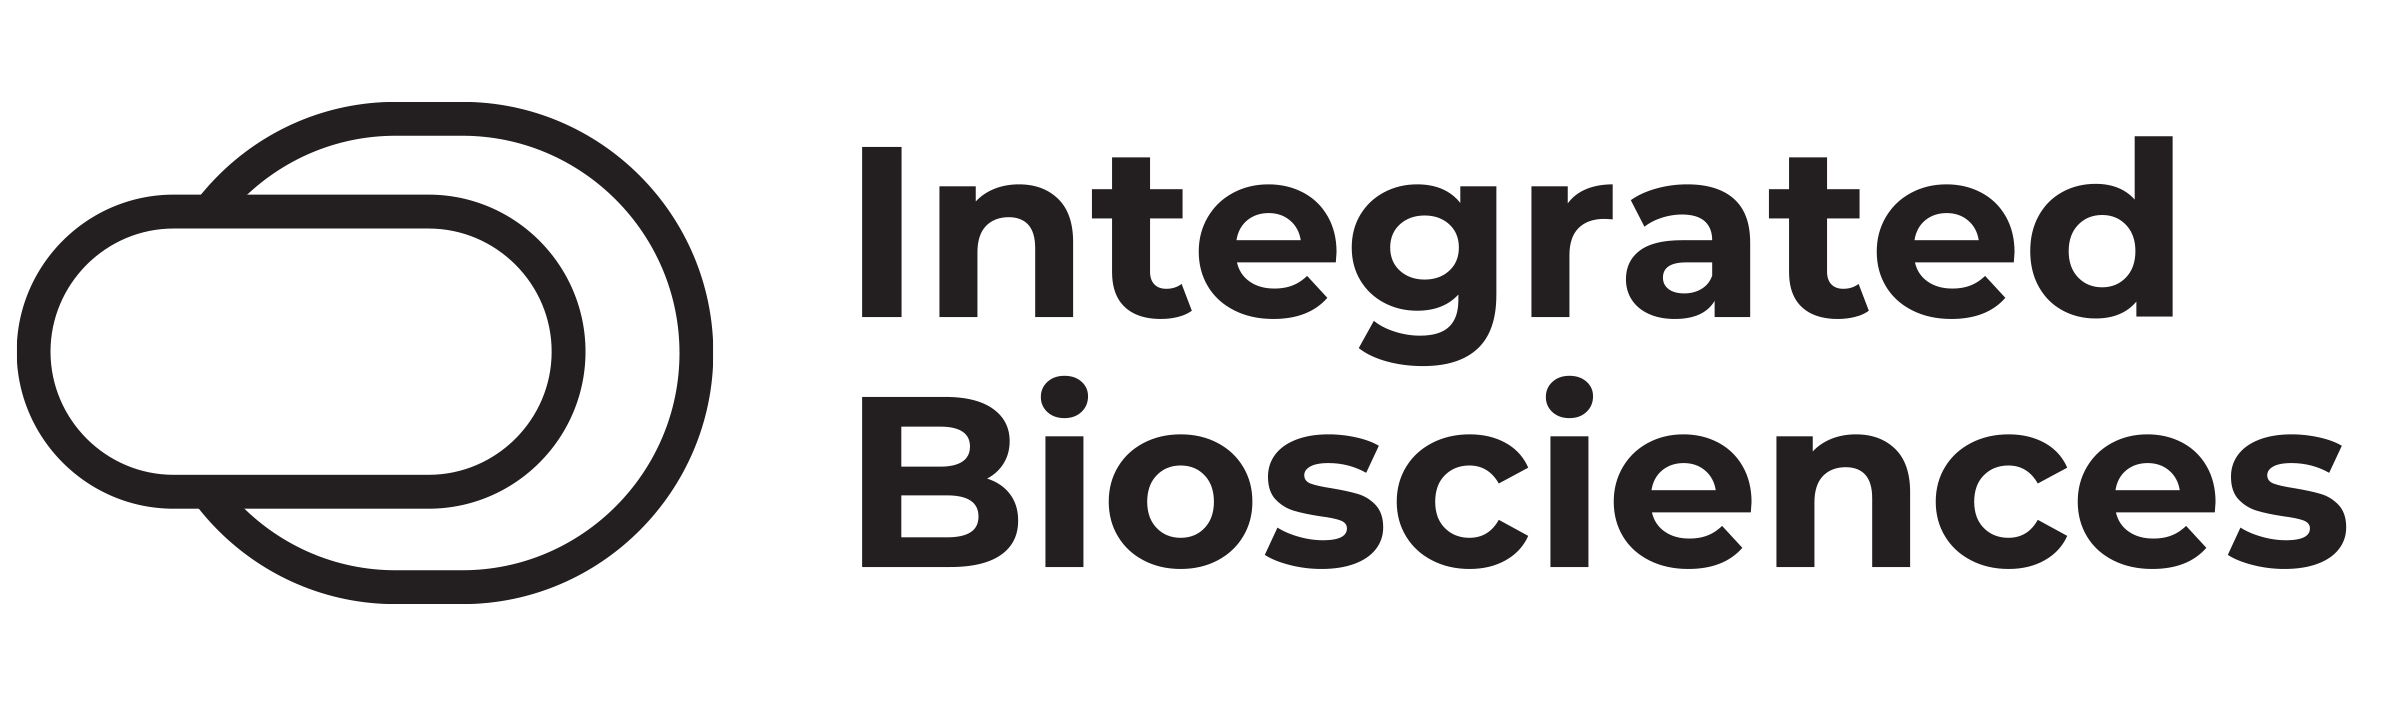 Integrated Biosciences